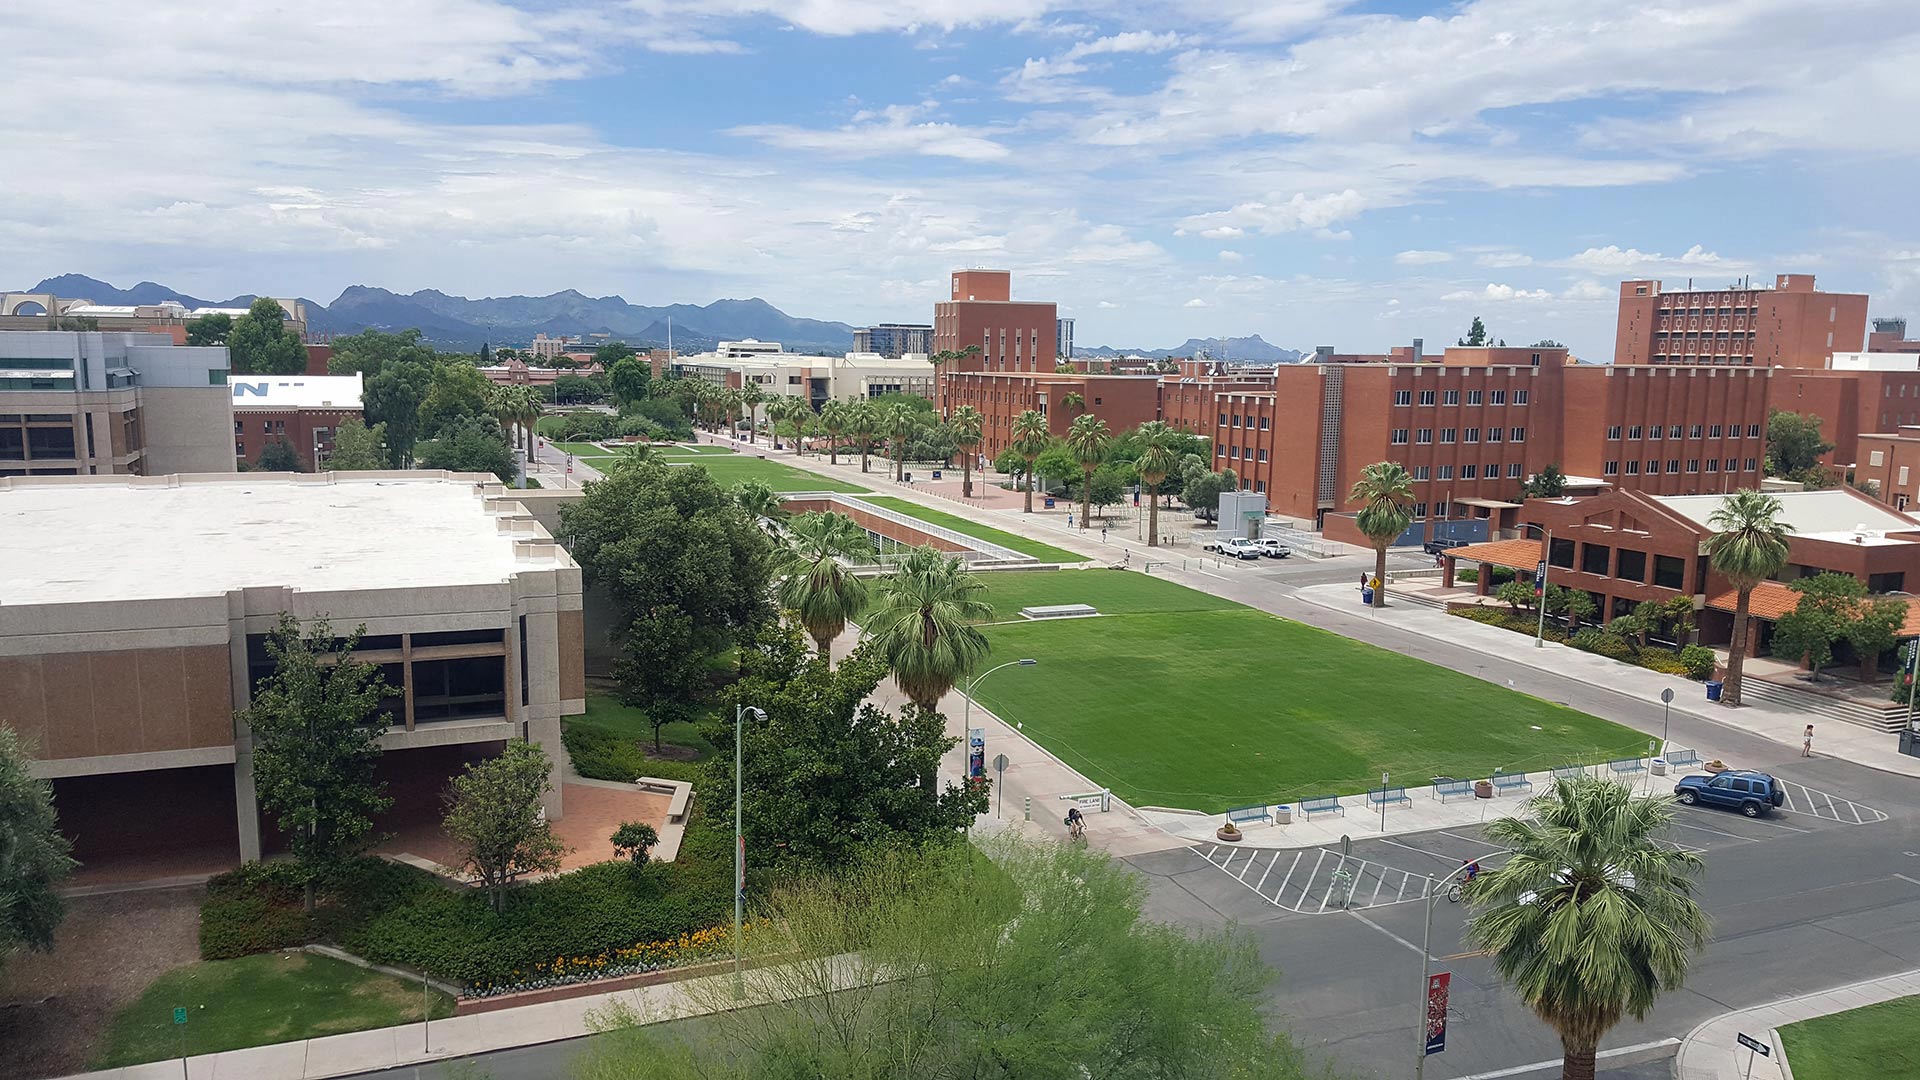 The University of Arizona campus.